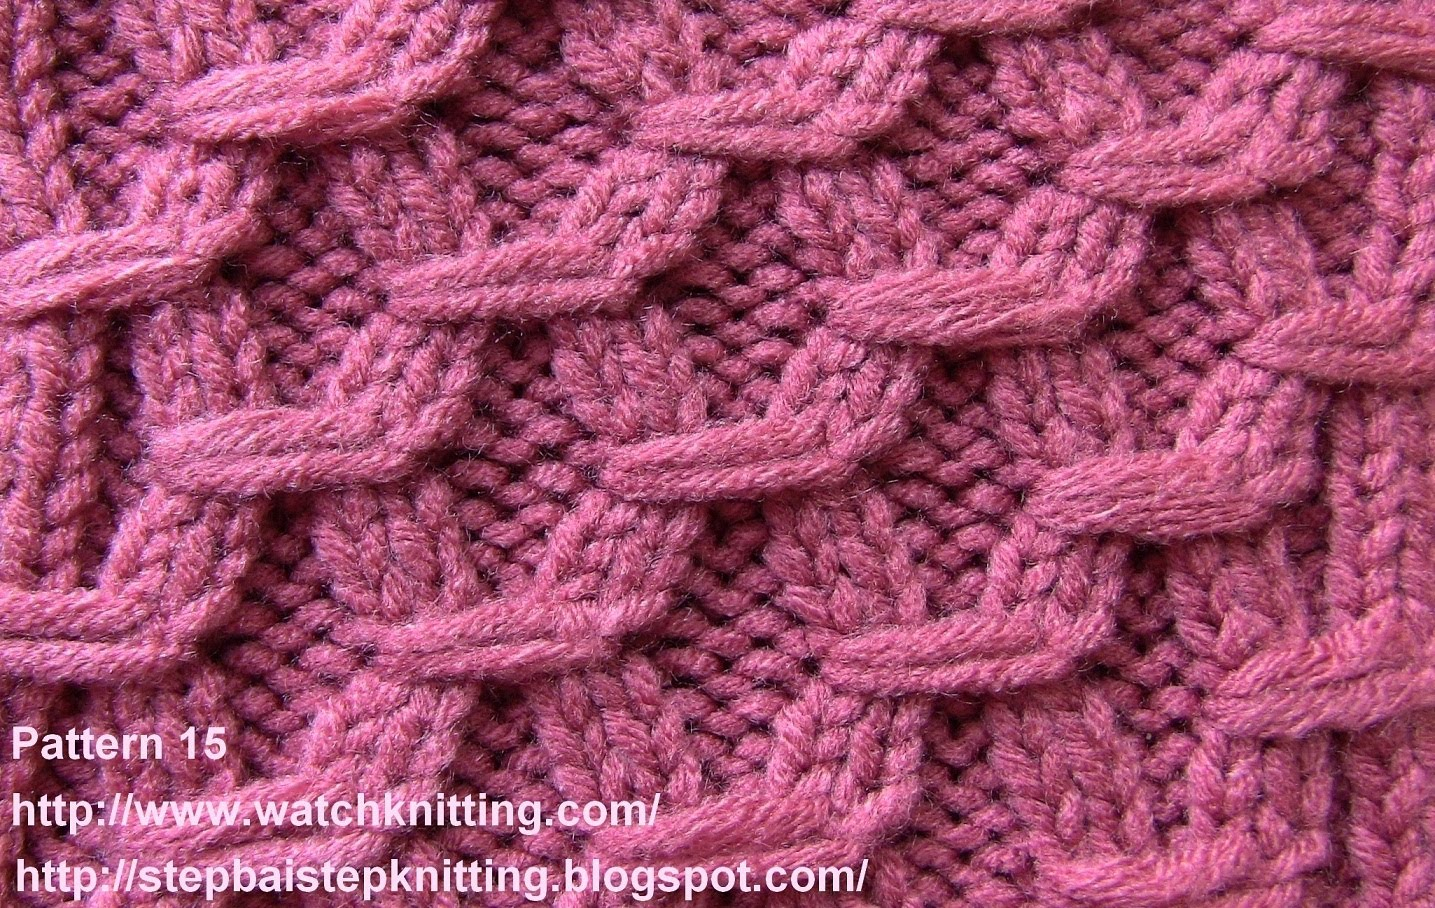 Knitting Patterns Designs Knitting Designs Hexagonal Embossed Patterns Crochet And